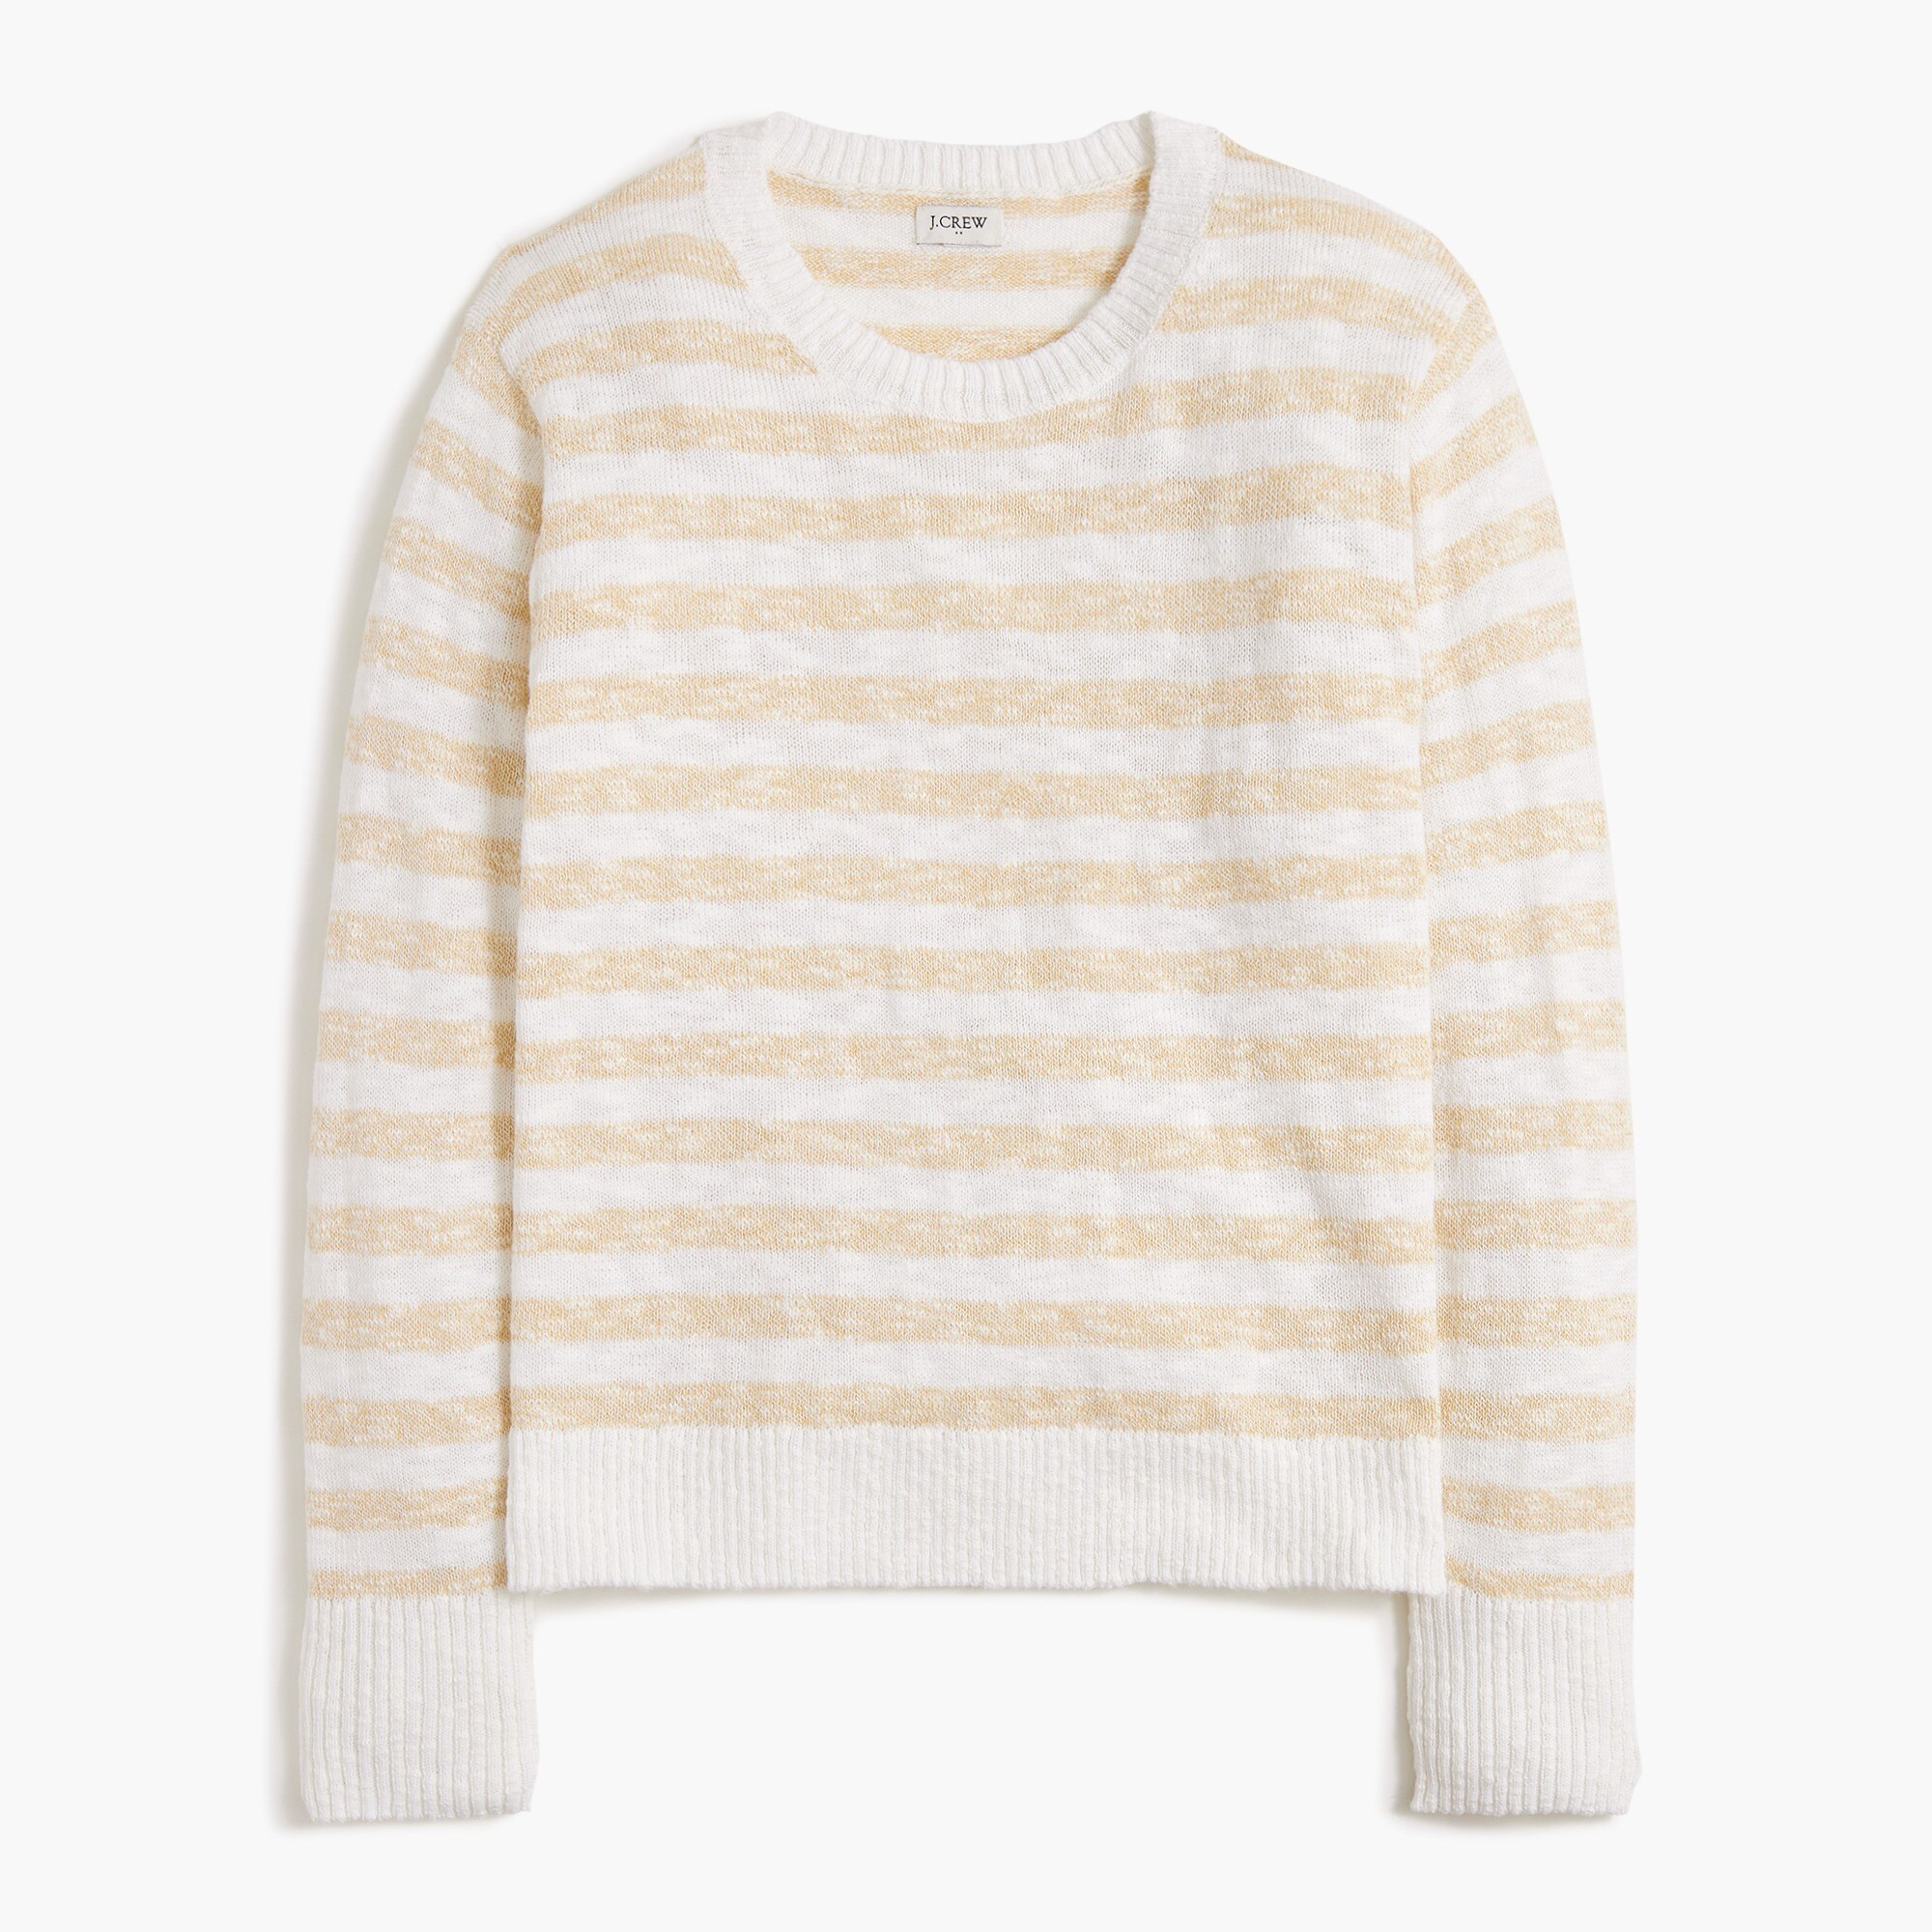  Striped crewneck beach sweater